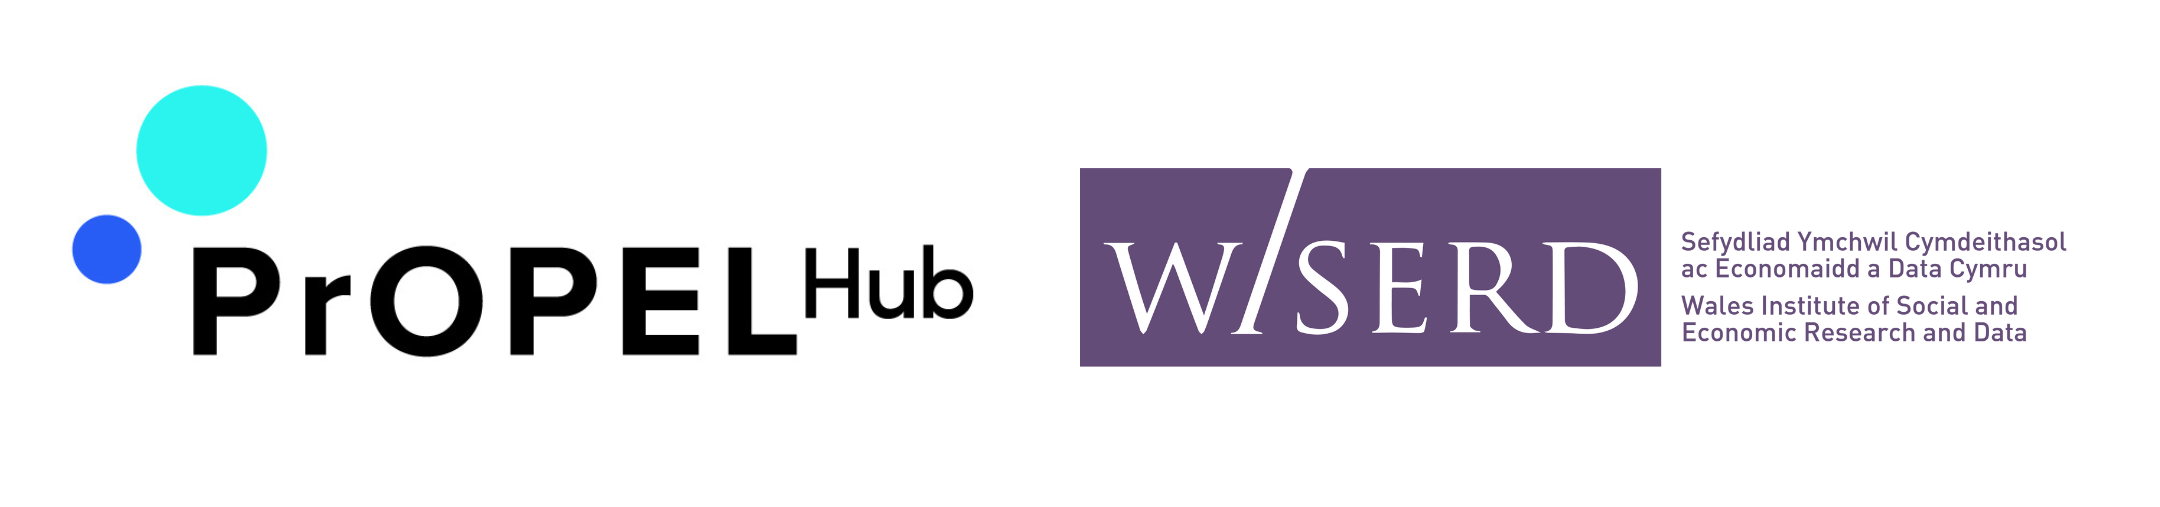 WISERD and PrOPEL logos